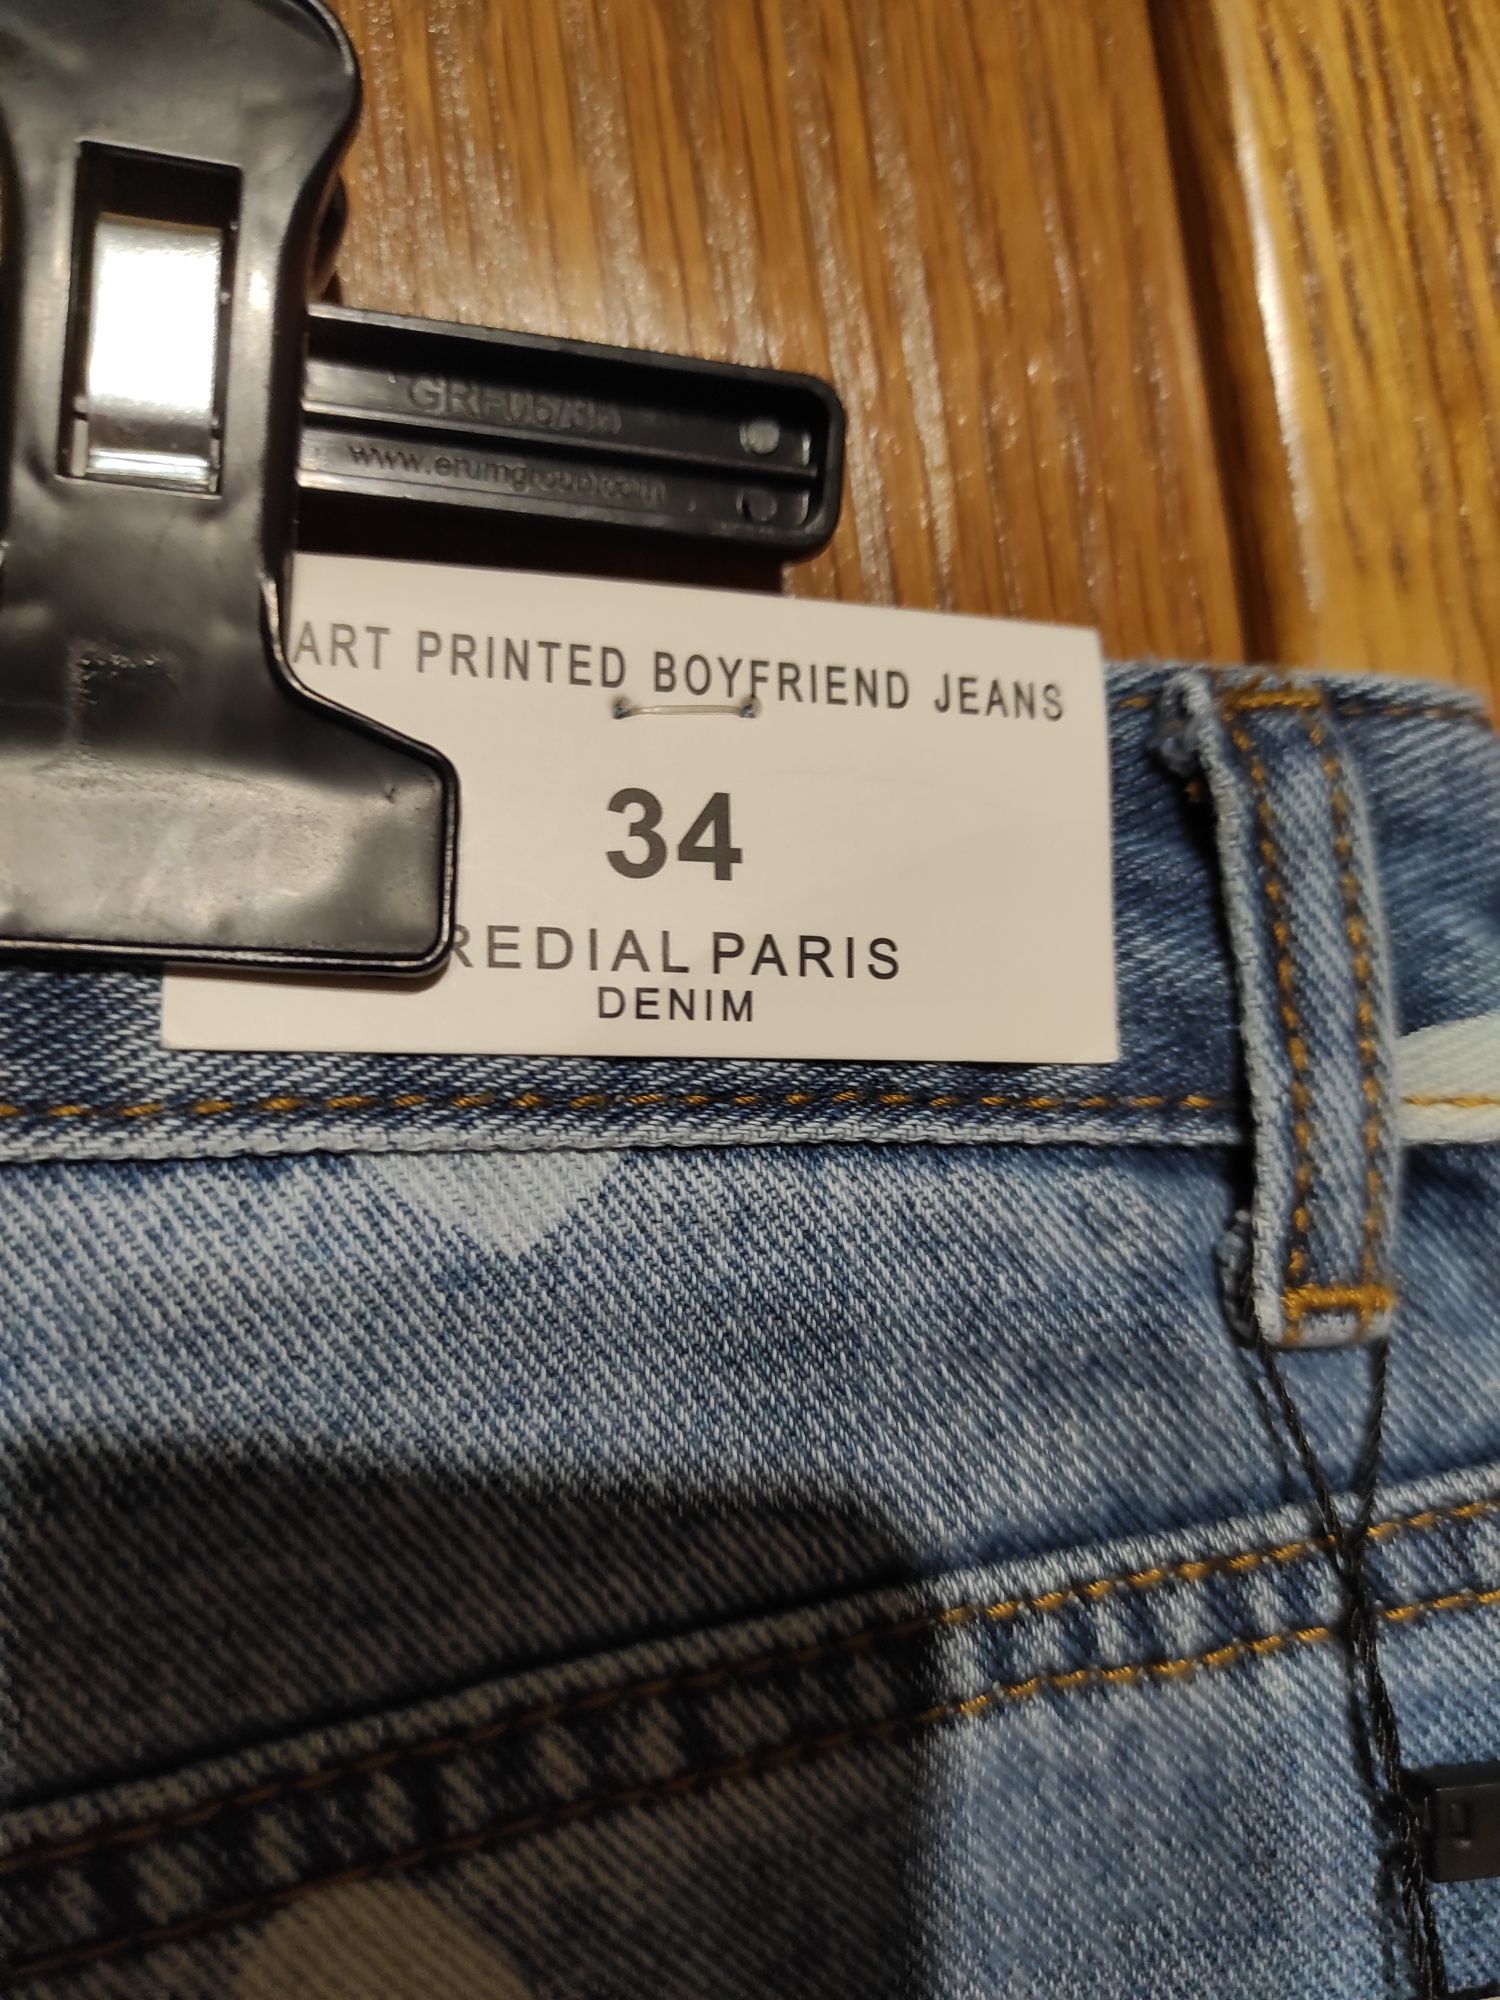 Jeans ,redial Paris,heart printre boyfriend jeans.